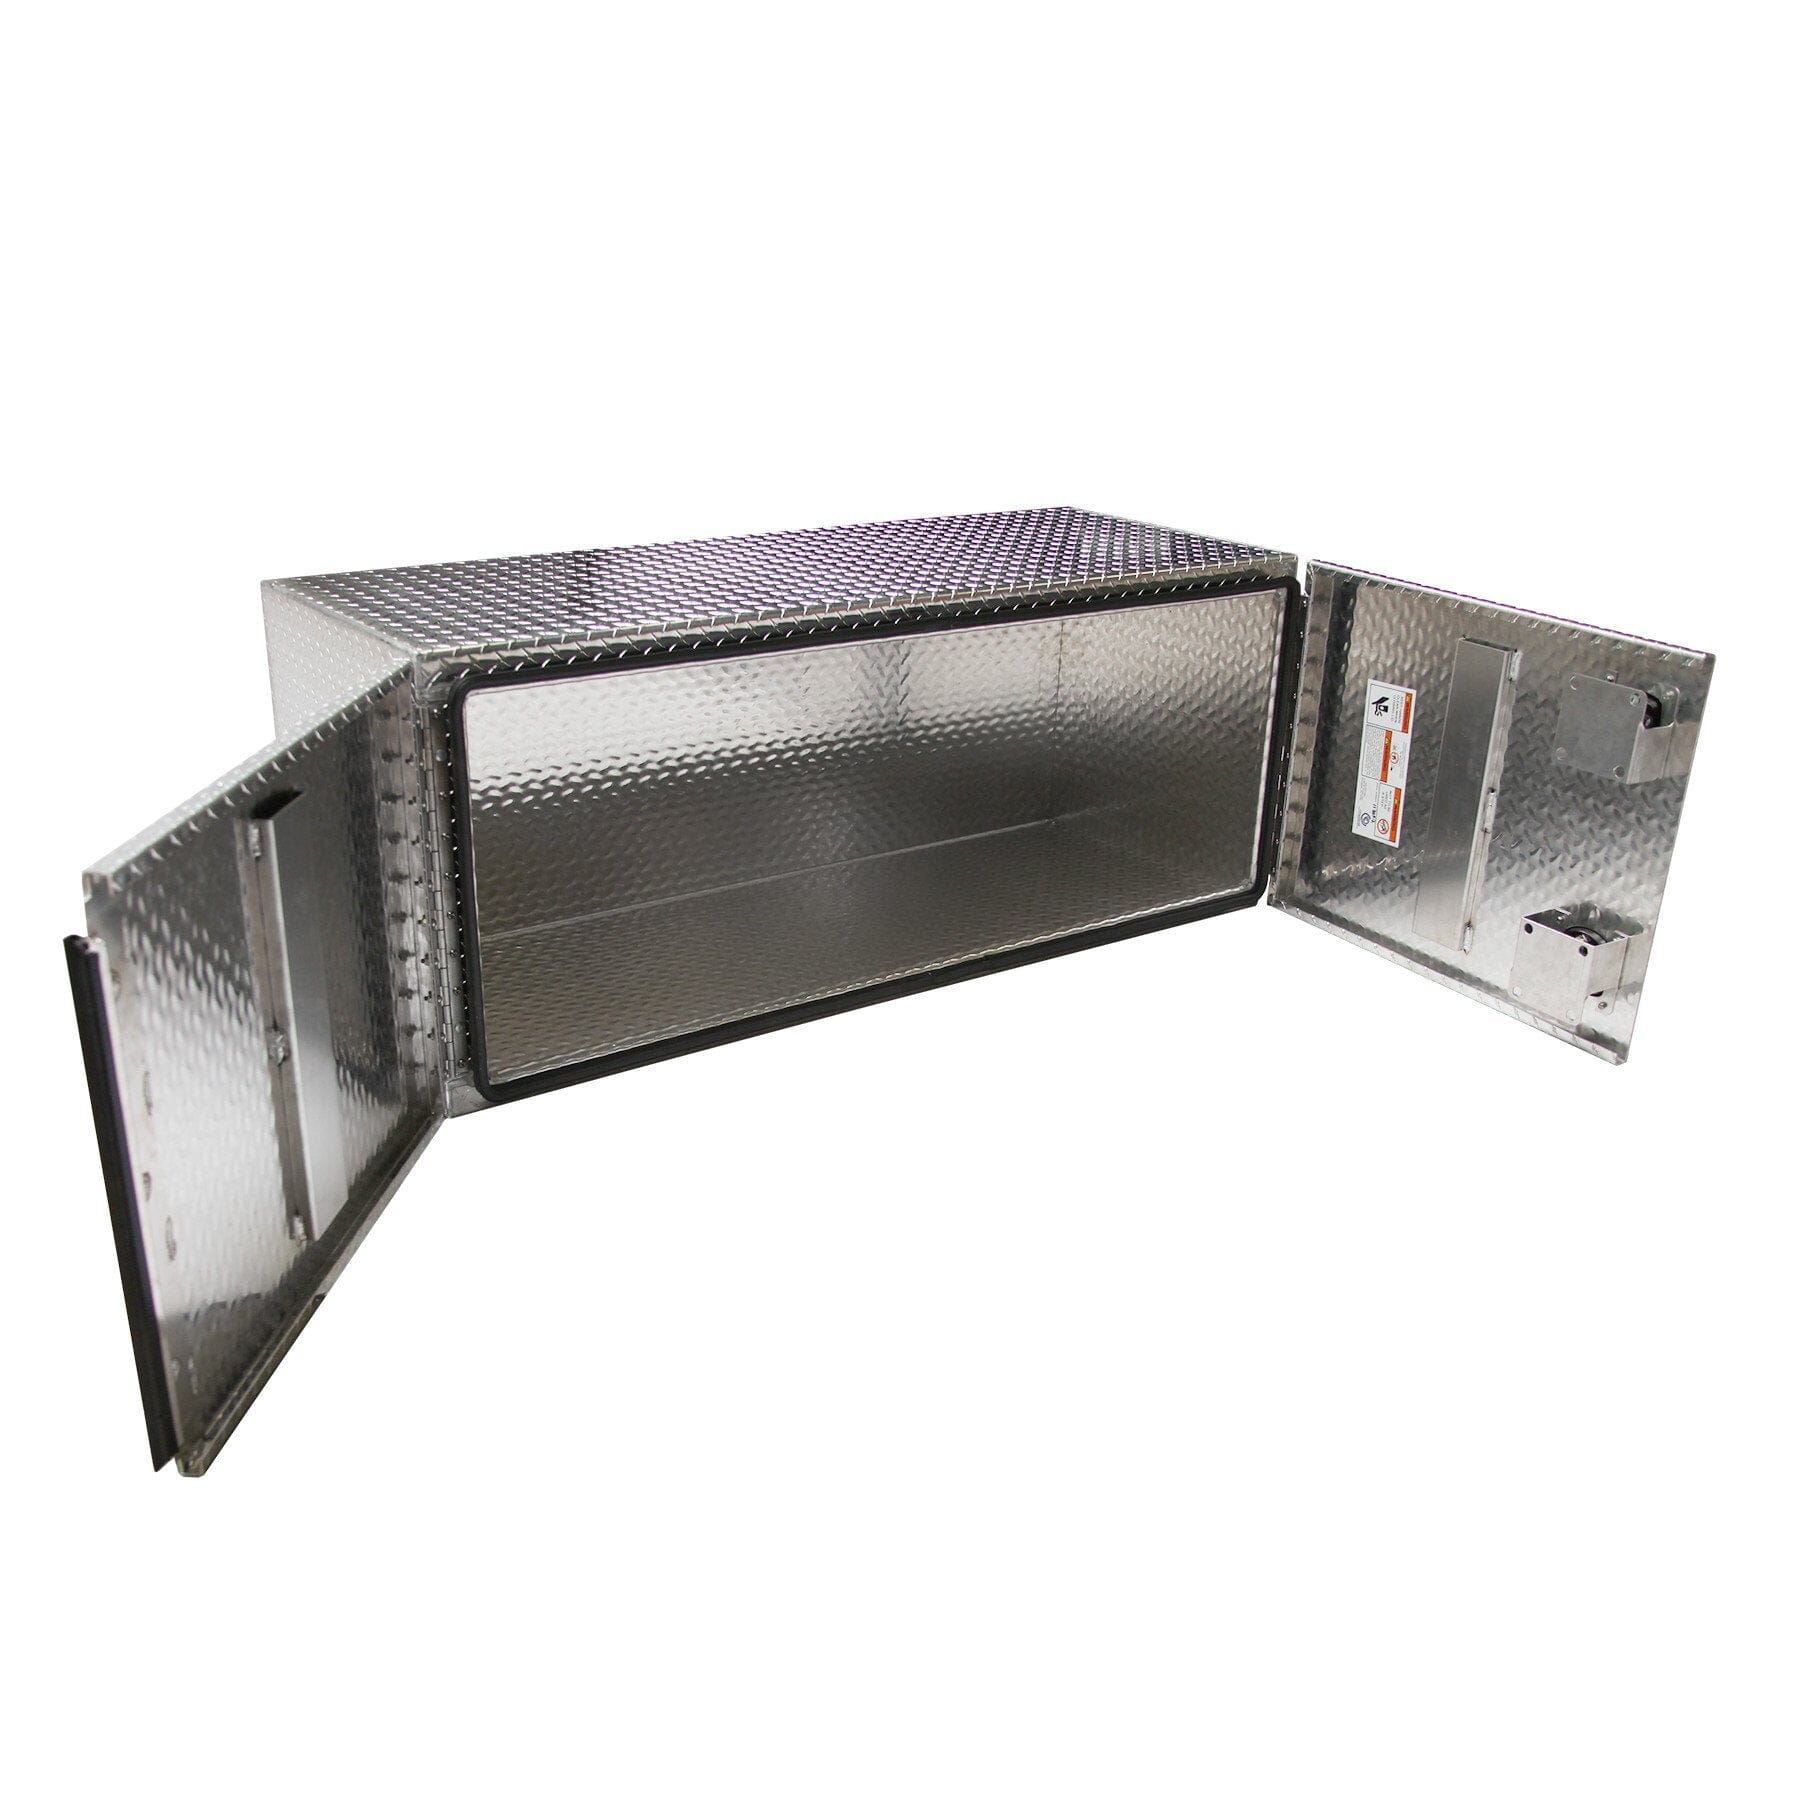 Image of Underbody Aluminum Tread Plate Barn Door Flat Bed Toolboxes | Chandler Truck Accessories